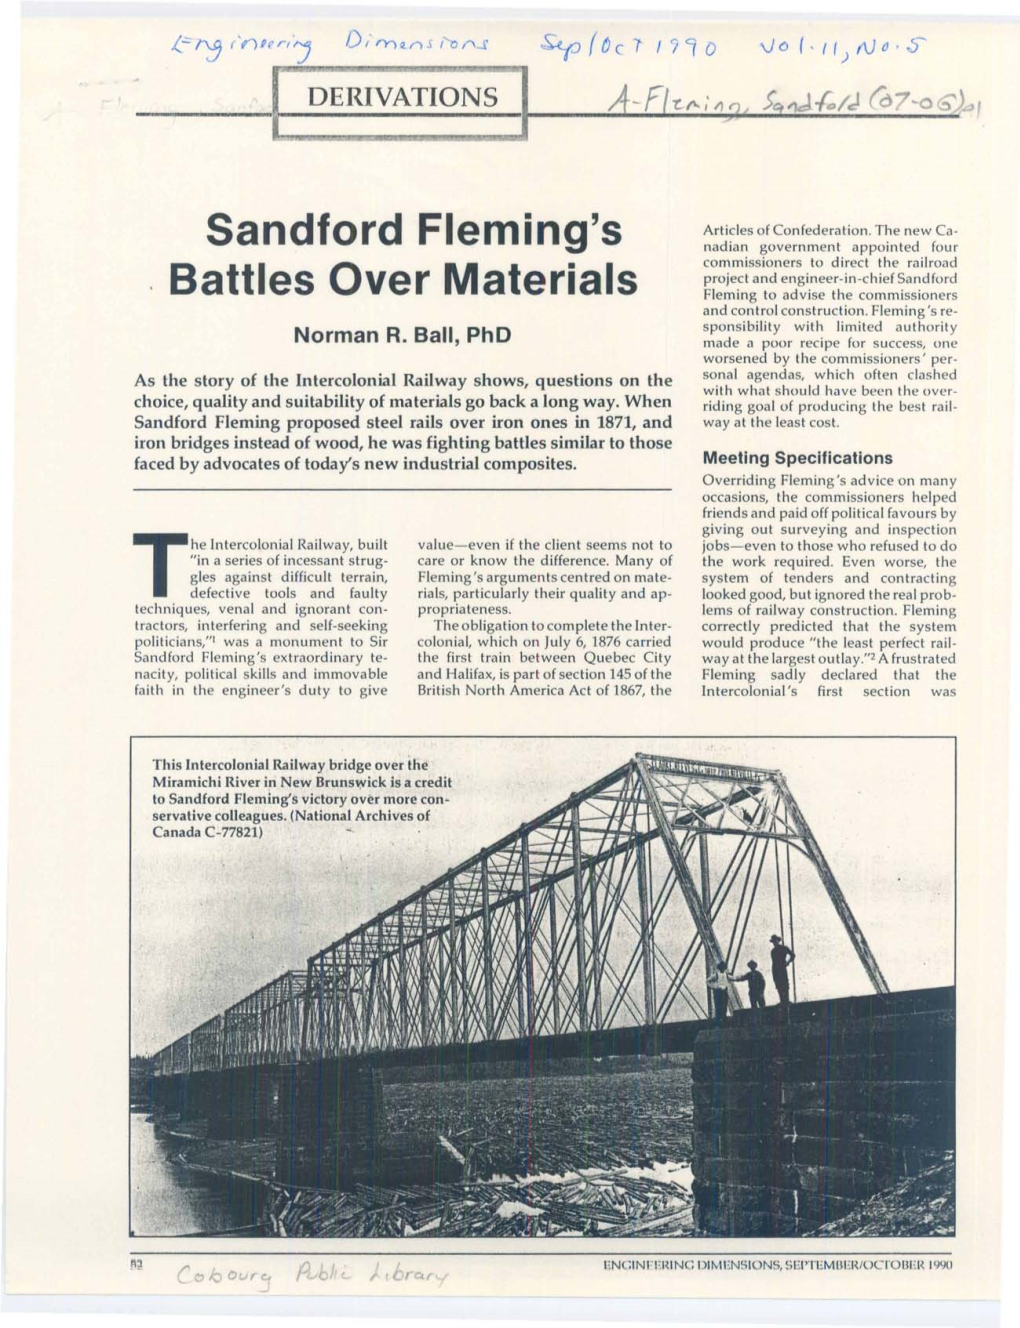 Sandford Fleming's Battles Over Materials